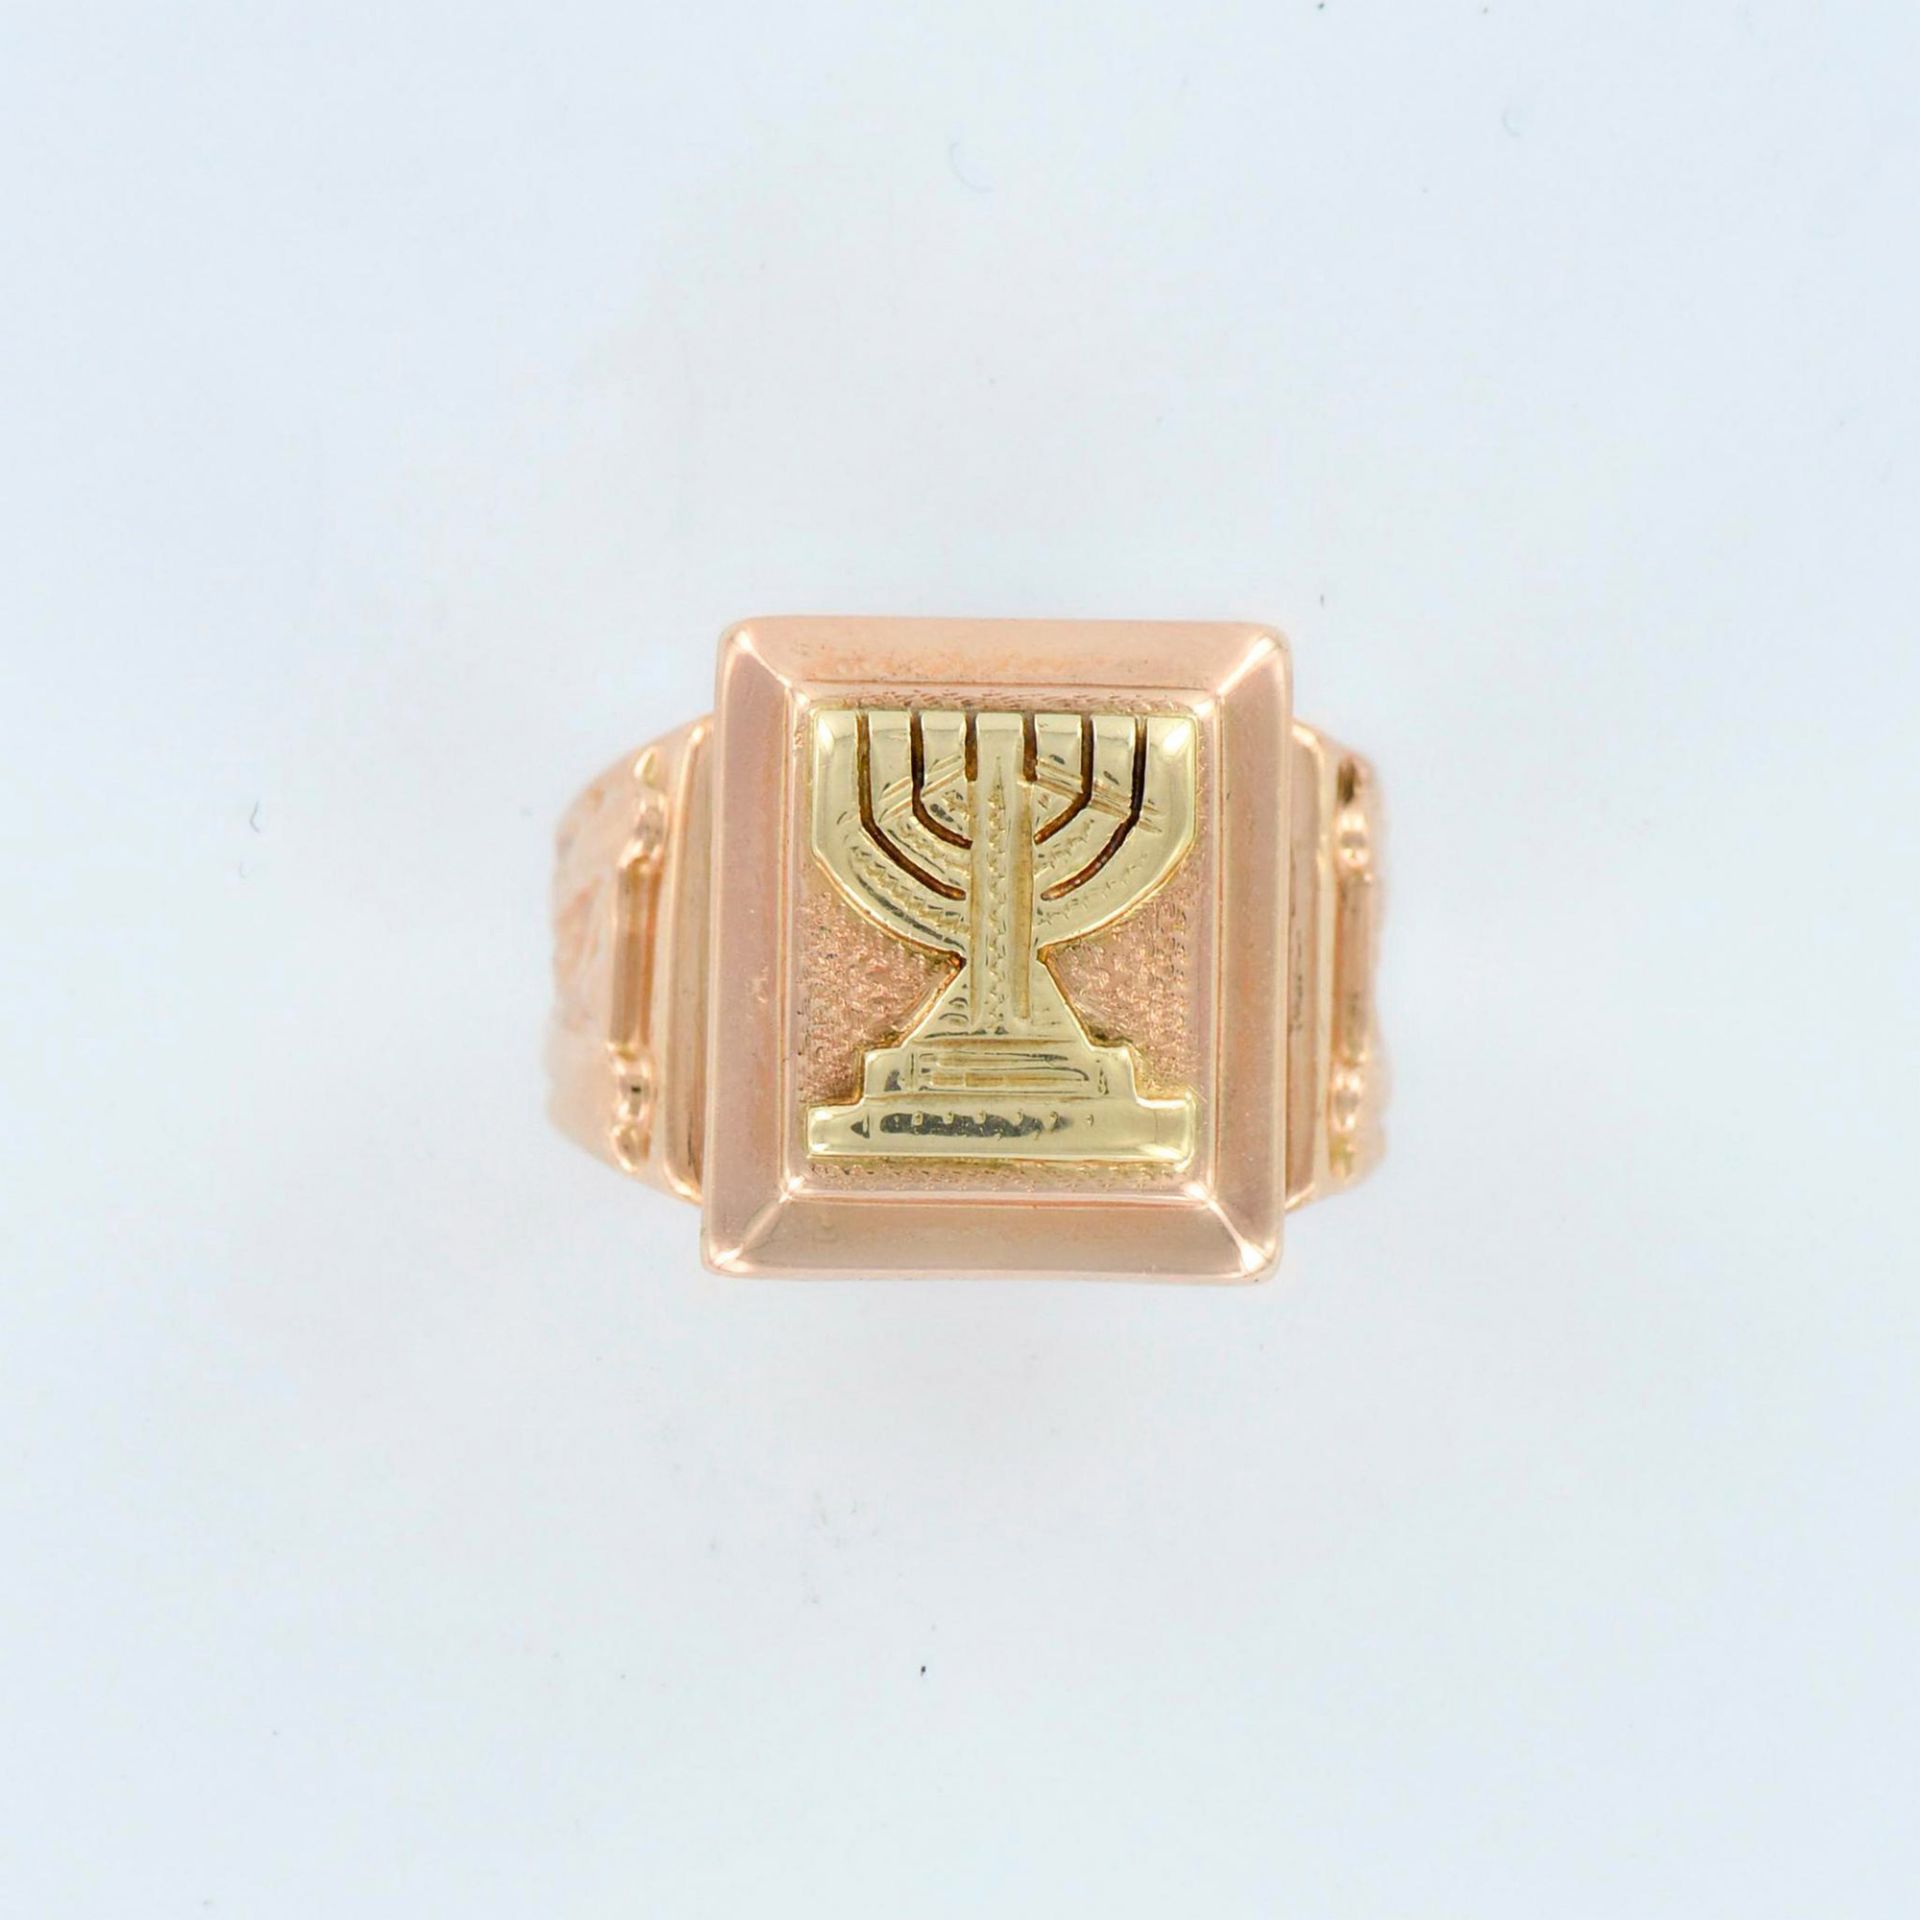 14K Yellow and Rose Gold Judaica Menorah Ring - Image 6 of 8